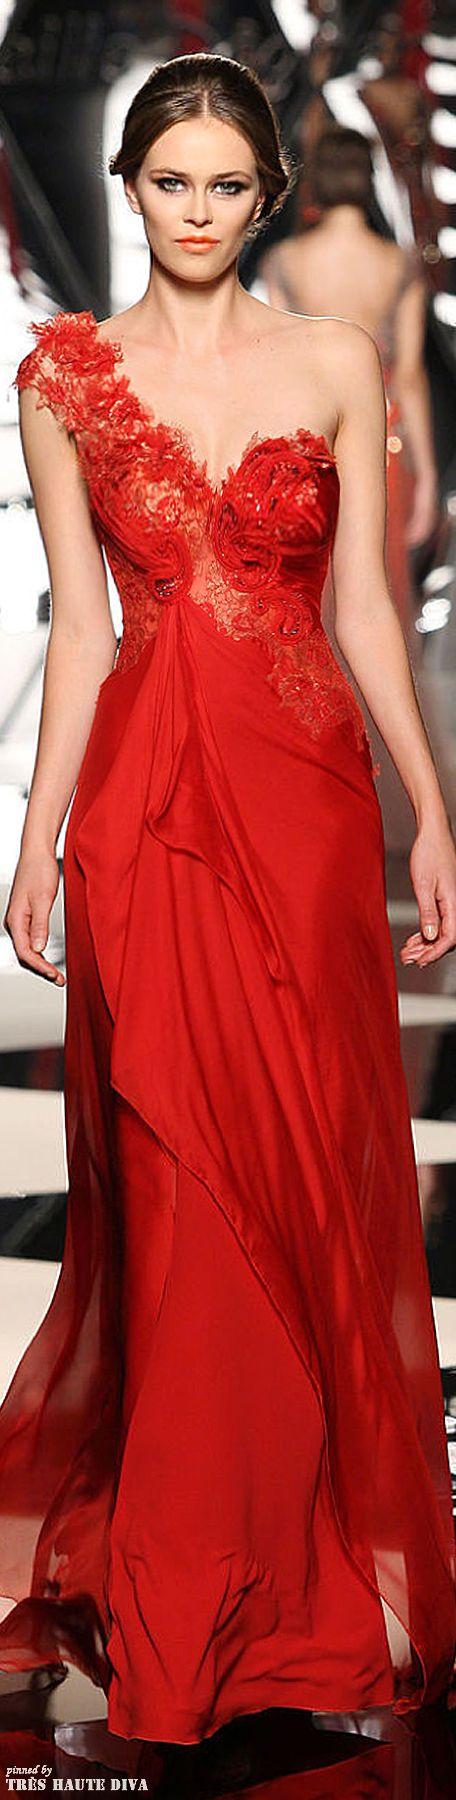 Red Wedding - Gowns...Ravishing Reds #2103003 - Weddbook